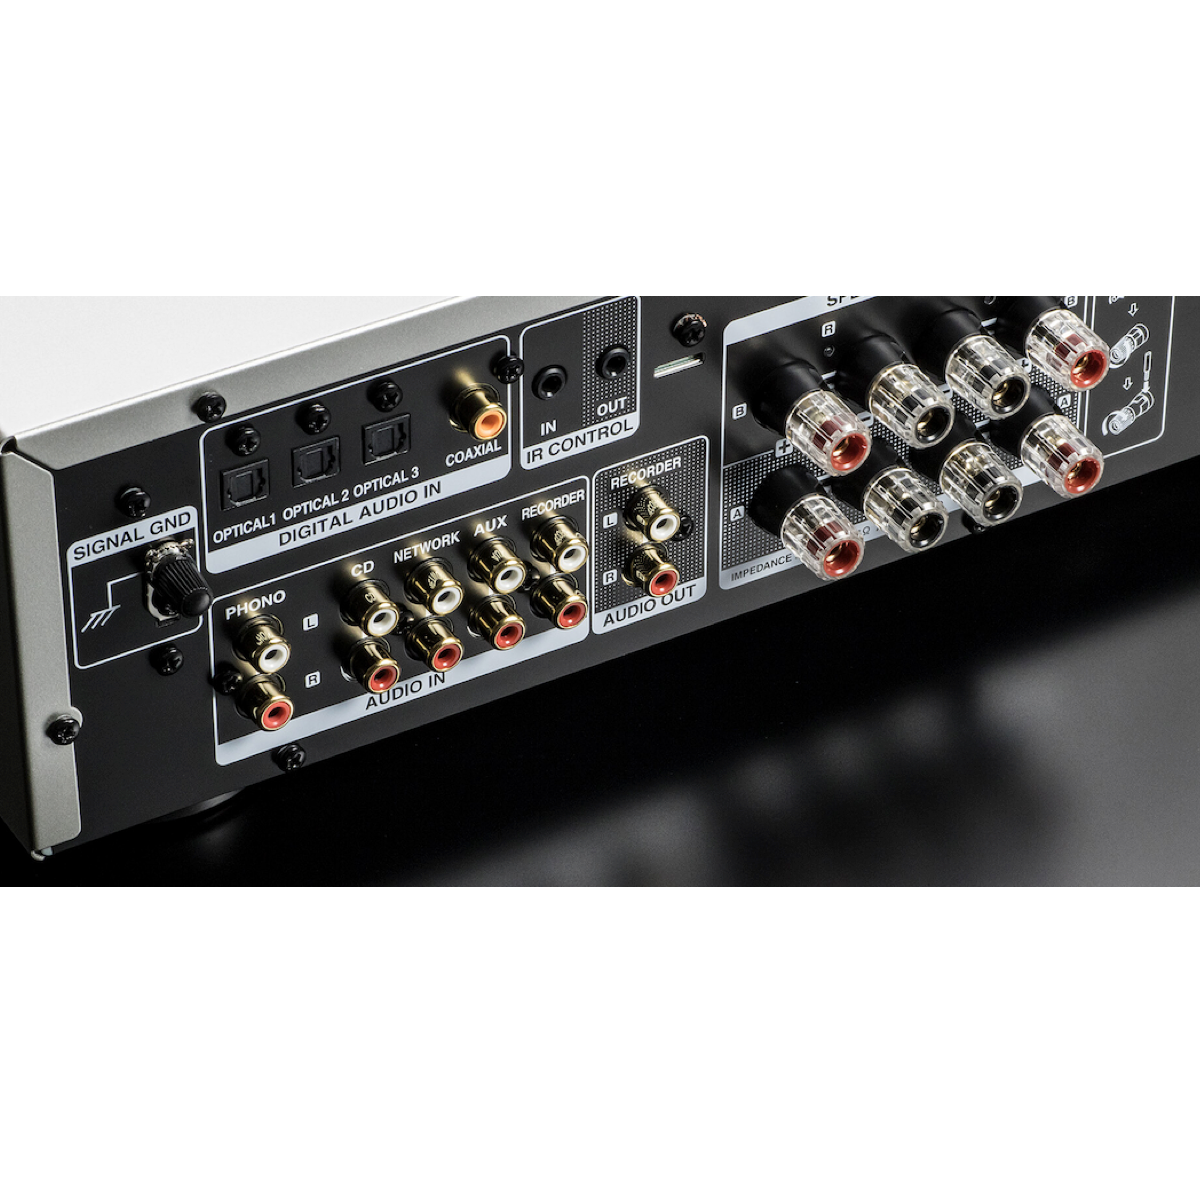 Denon PMA-800NE - Integrated Stereo Amplifier - AVStore